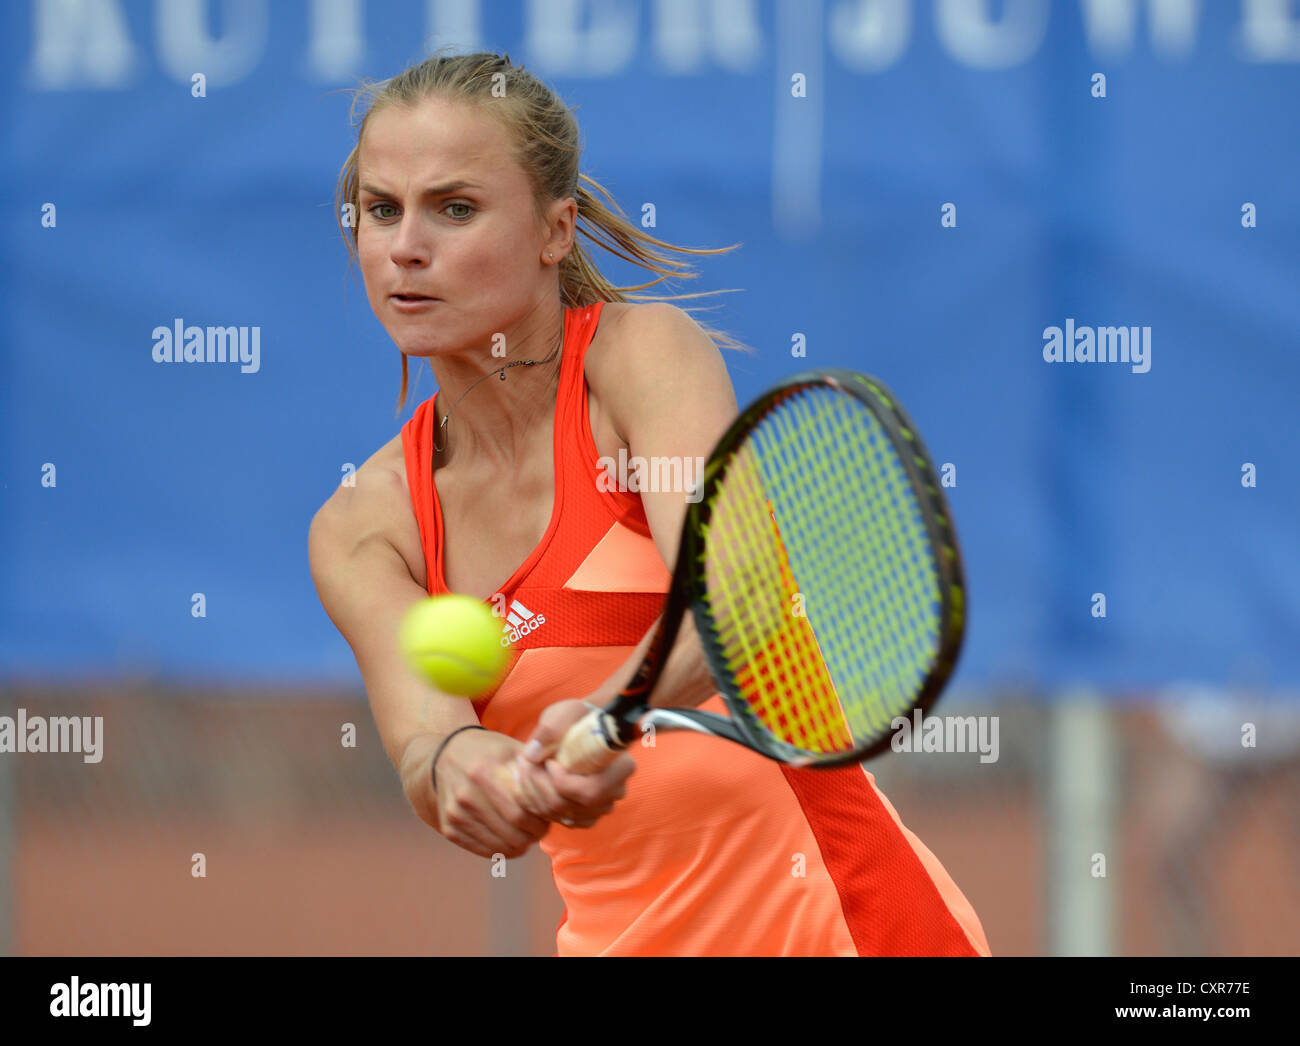 Tennis bundesliga hi-res stock photography and images - Alamy